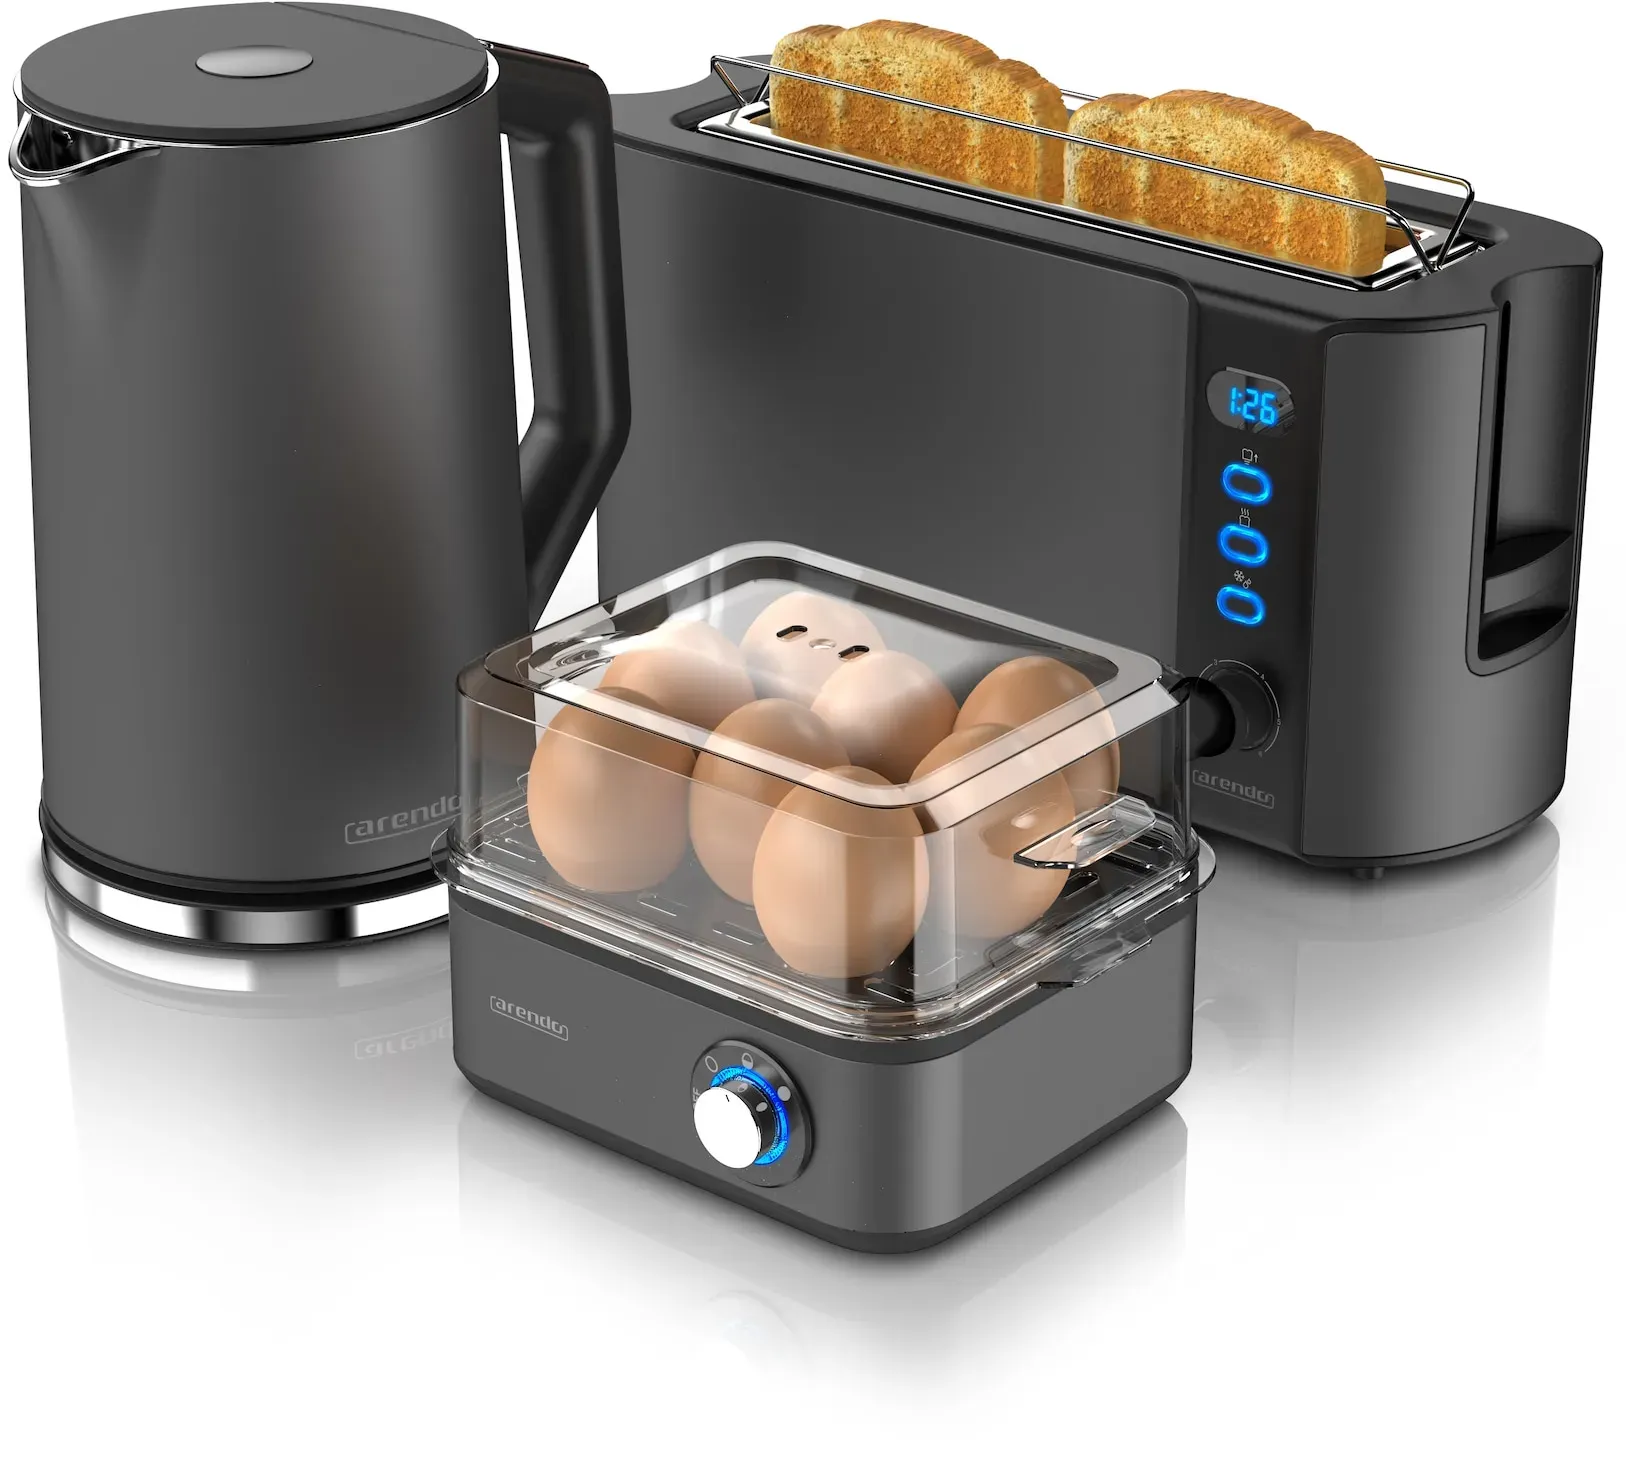 Arendo Frühstücks-Set in grau - Wasserkocher / Toaster / Eierkocher